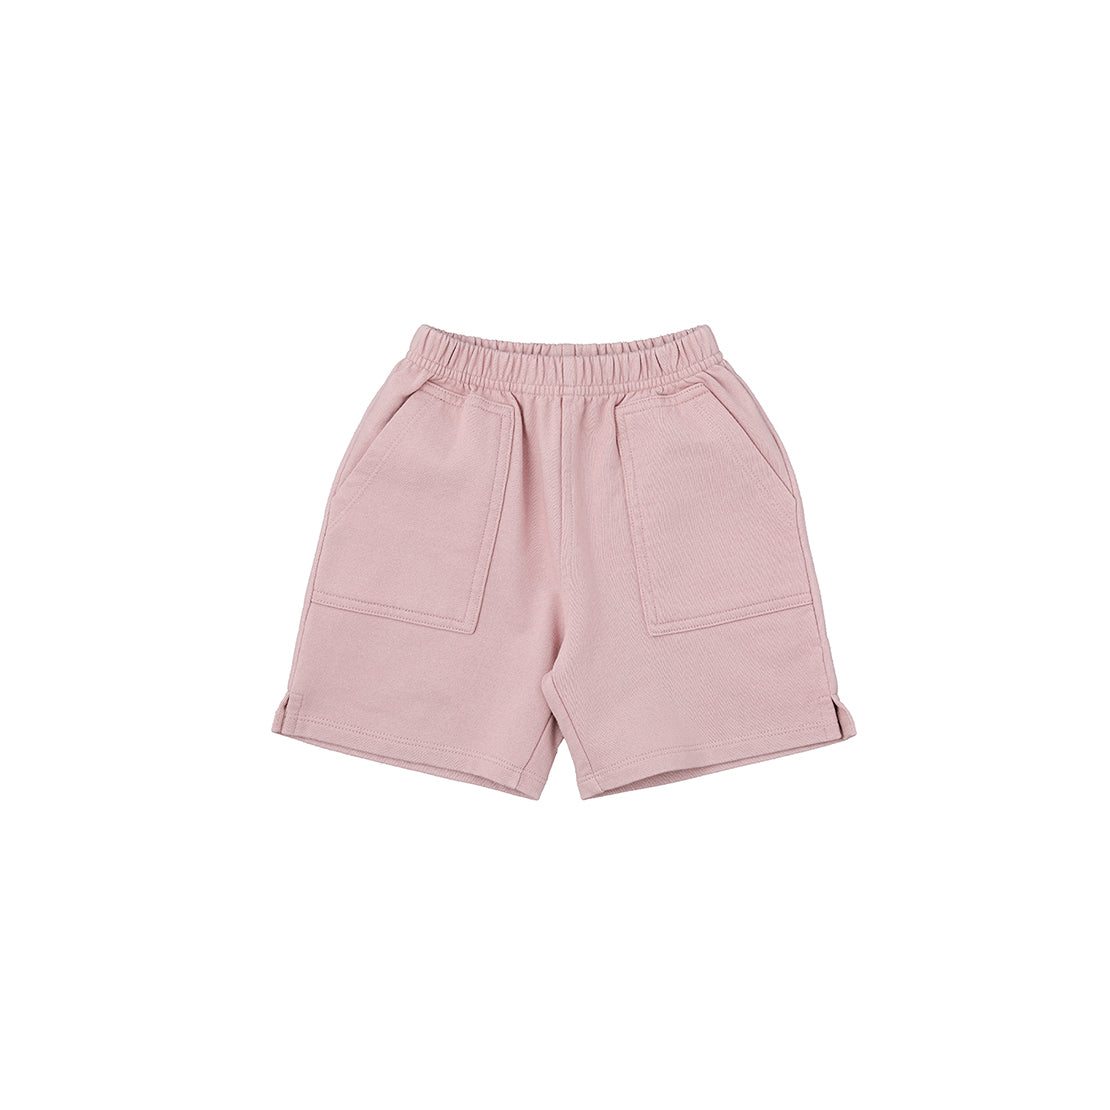 BREEZE POCKET Summer Shorts Pink